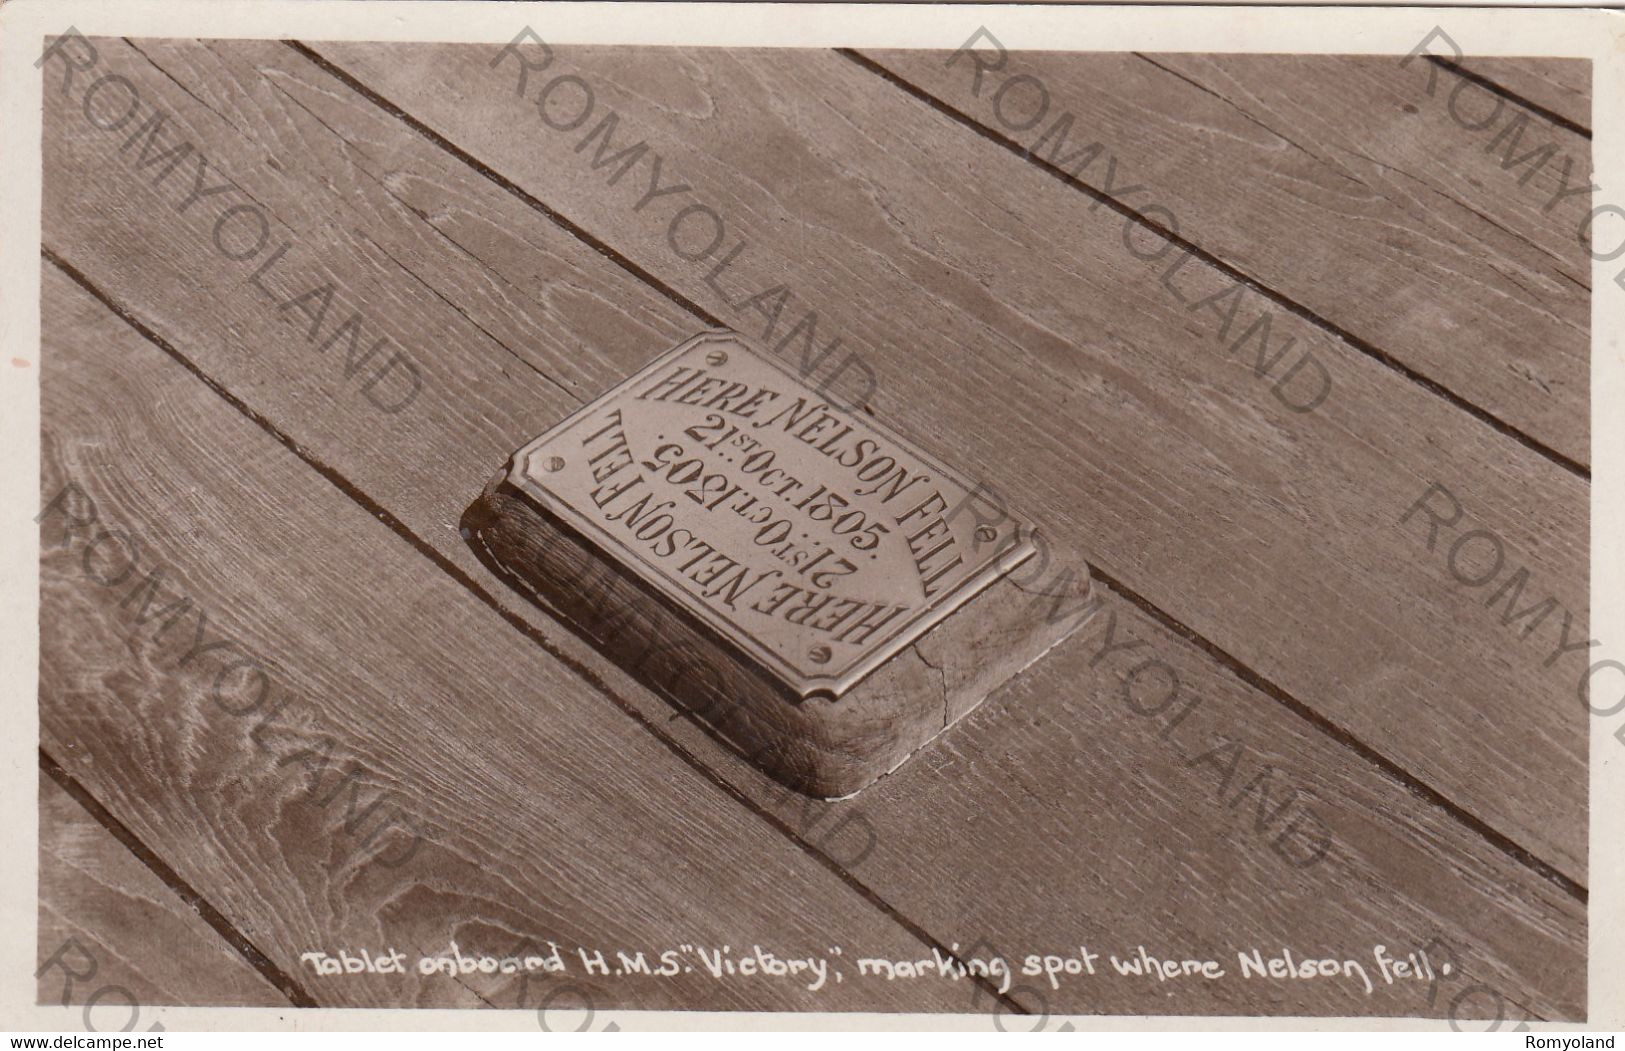 CARTOLINA   TABLET ONBOARD H.M.S."VICTORY",MARKING SPOT WHERE NELSON FELL,NON VIAGGIATA - World